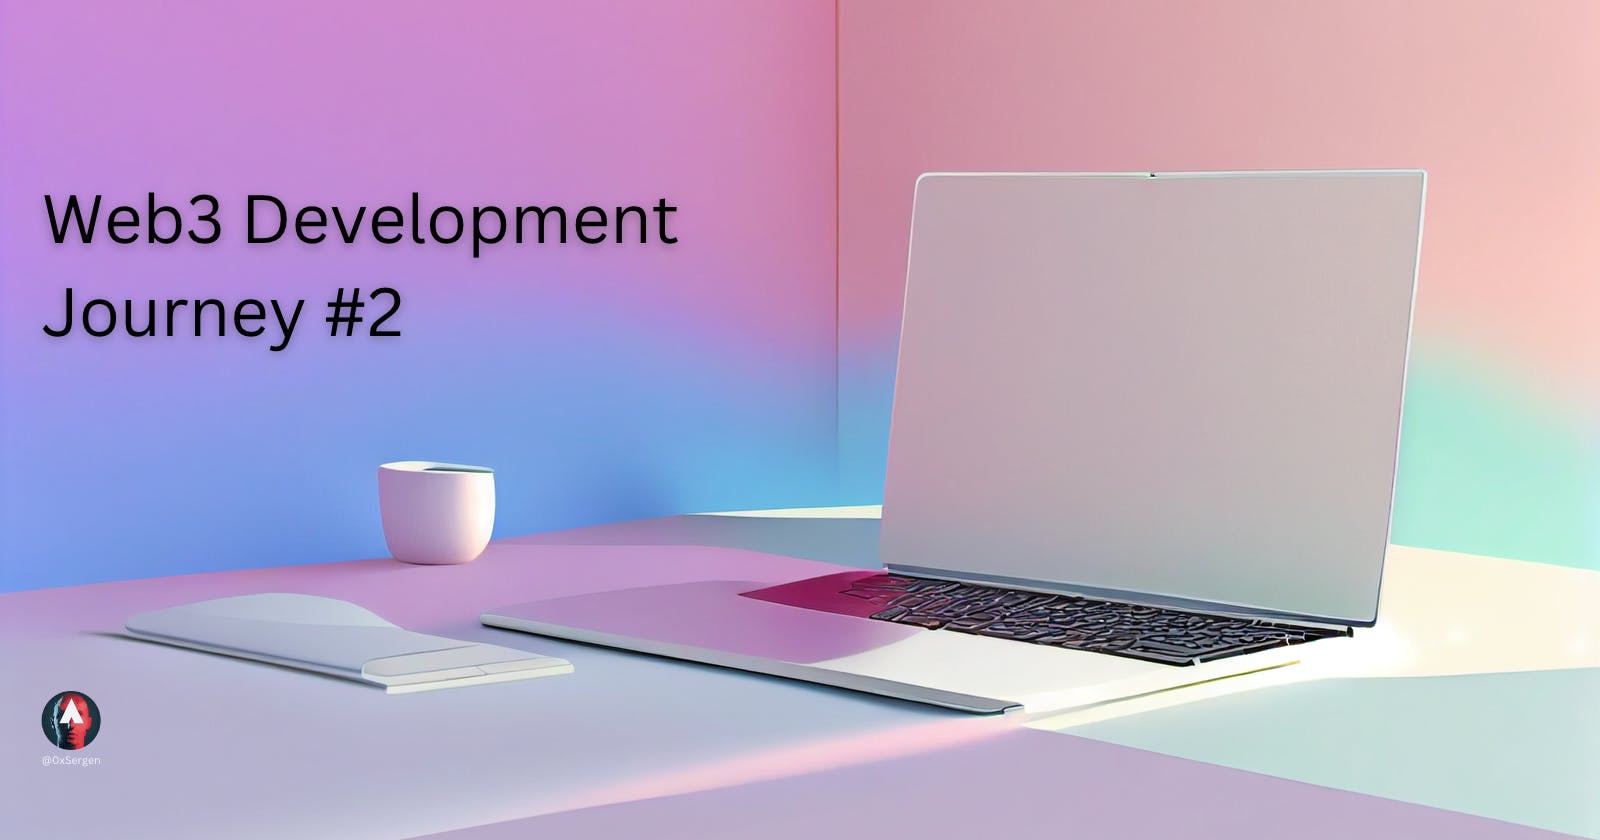 Web3 Development Journey #2